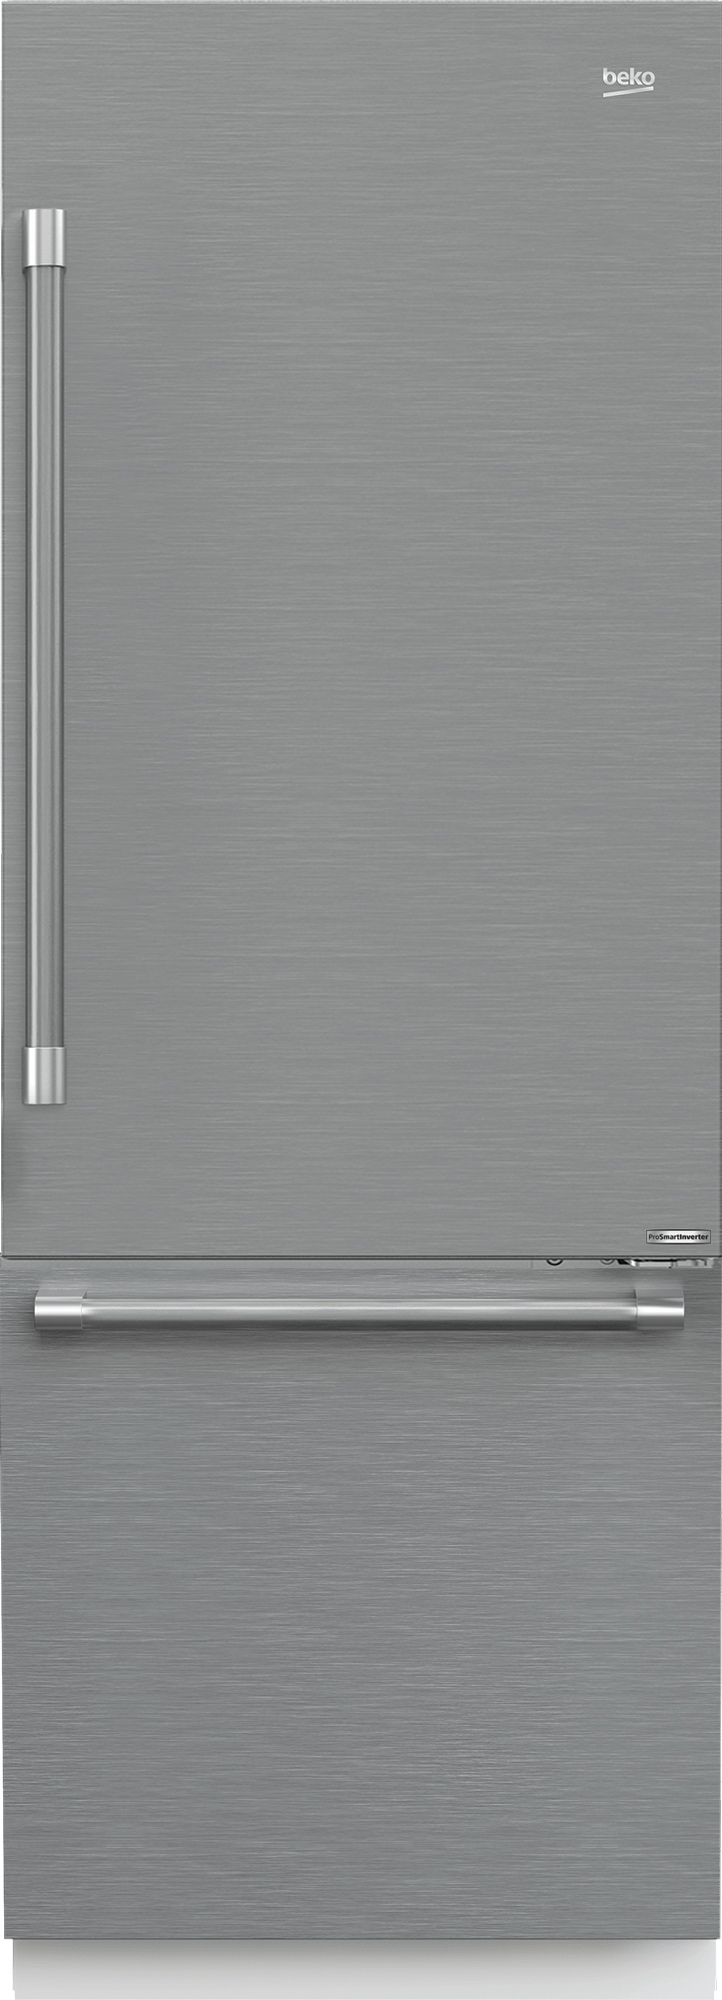 Beko 30" Stainless Steel Freezer Bottom Built-In Refrigerator with Auto Ice Maker, WaterDispenser